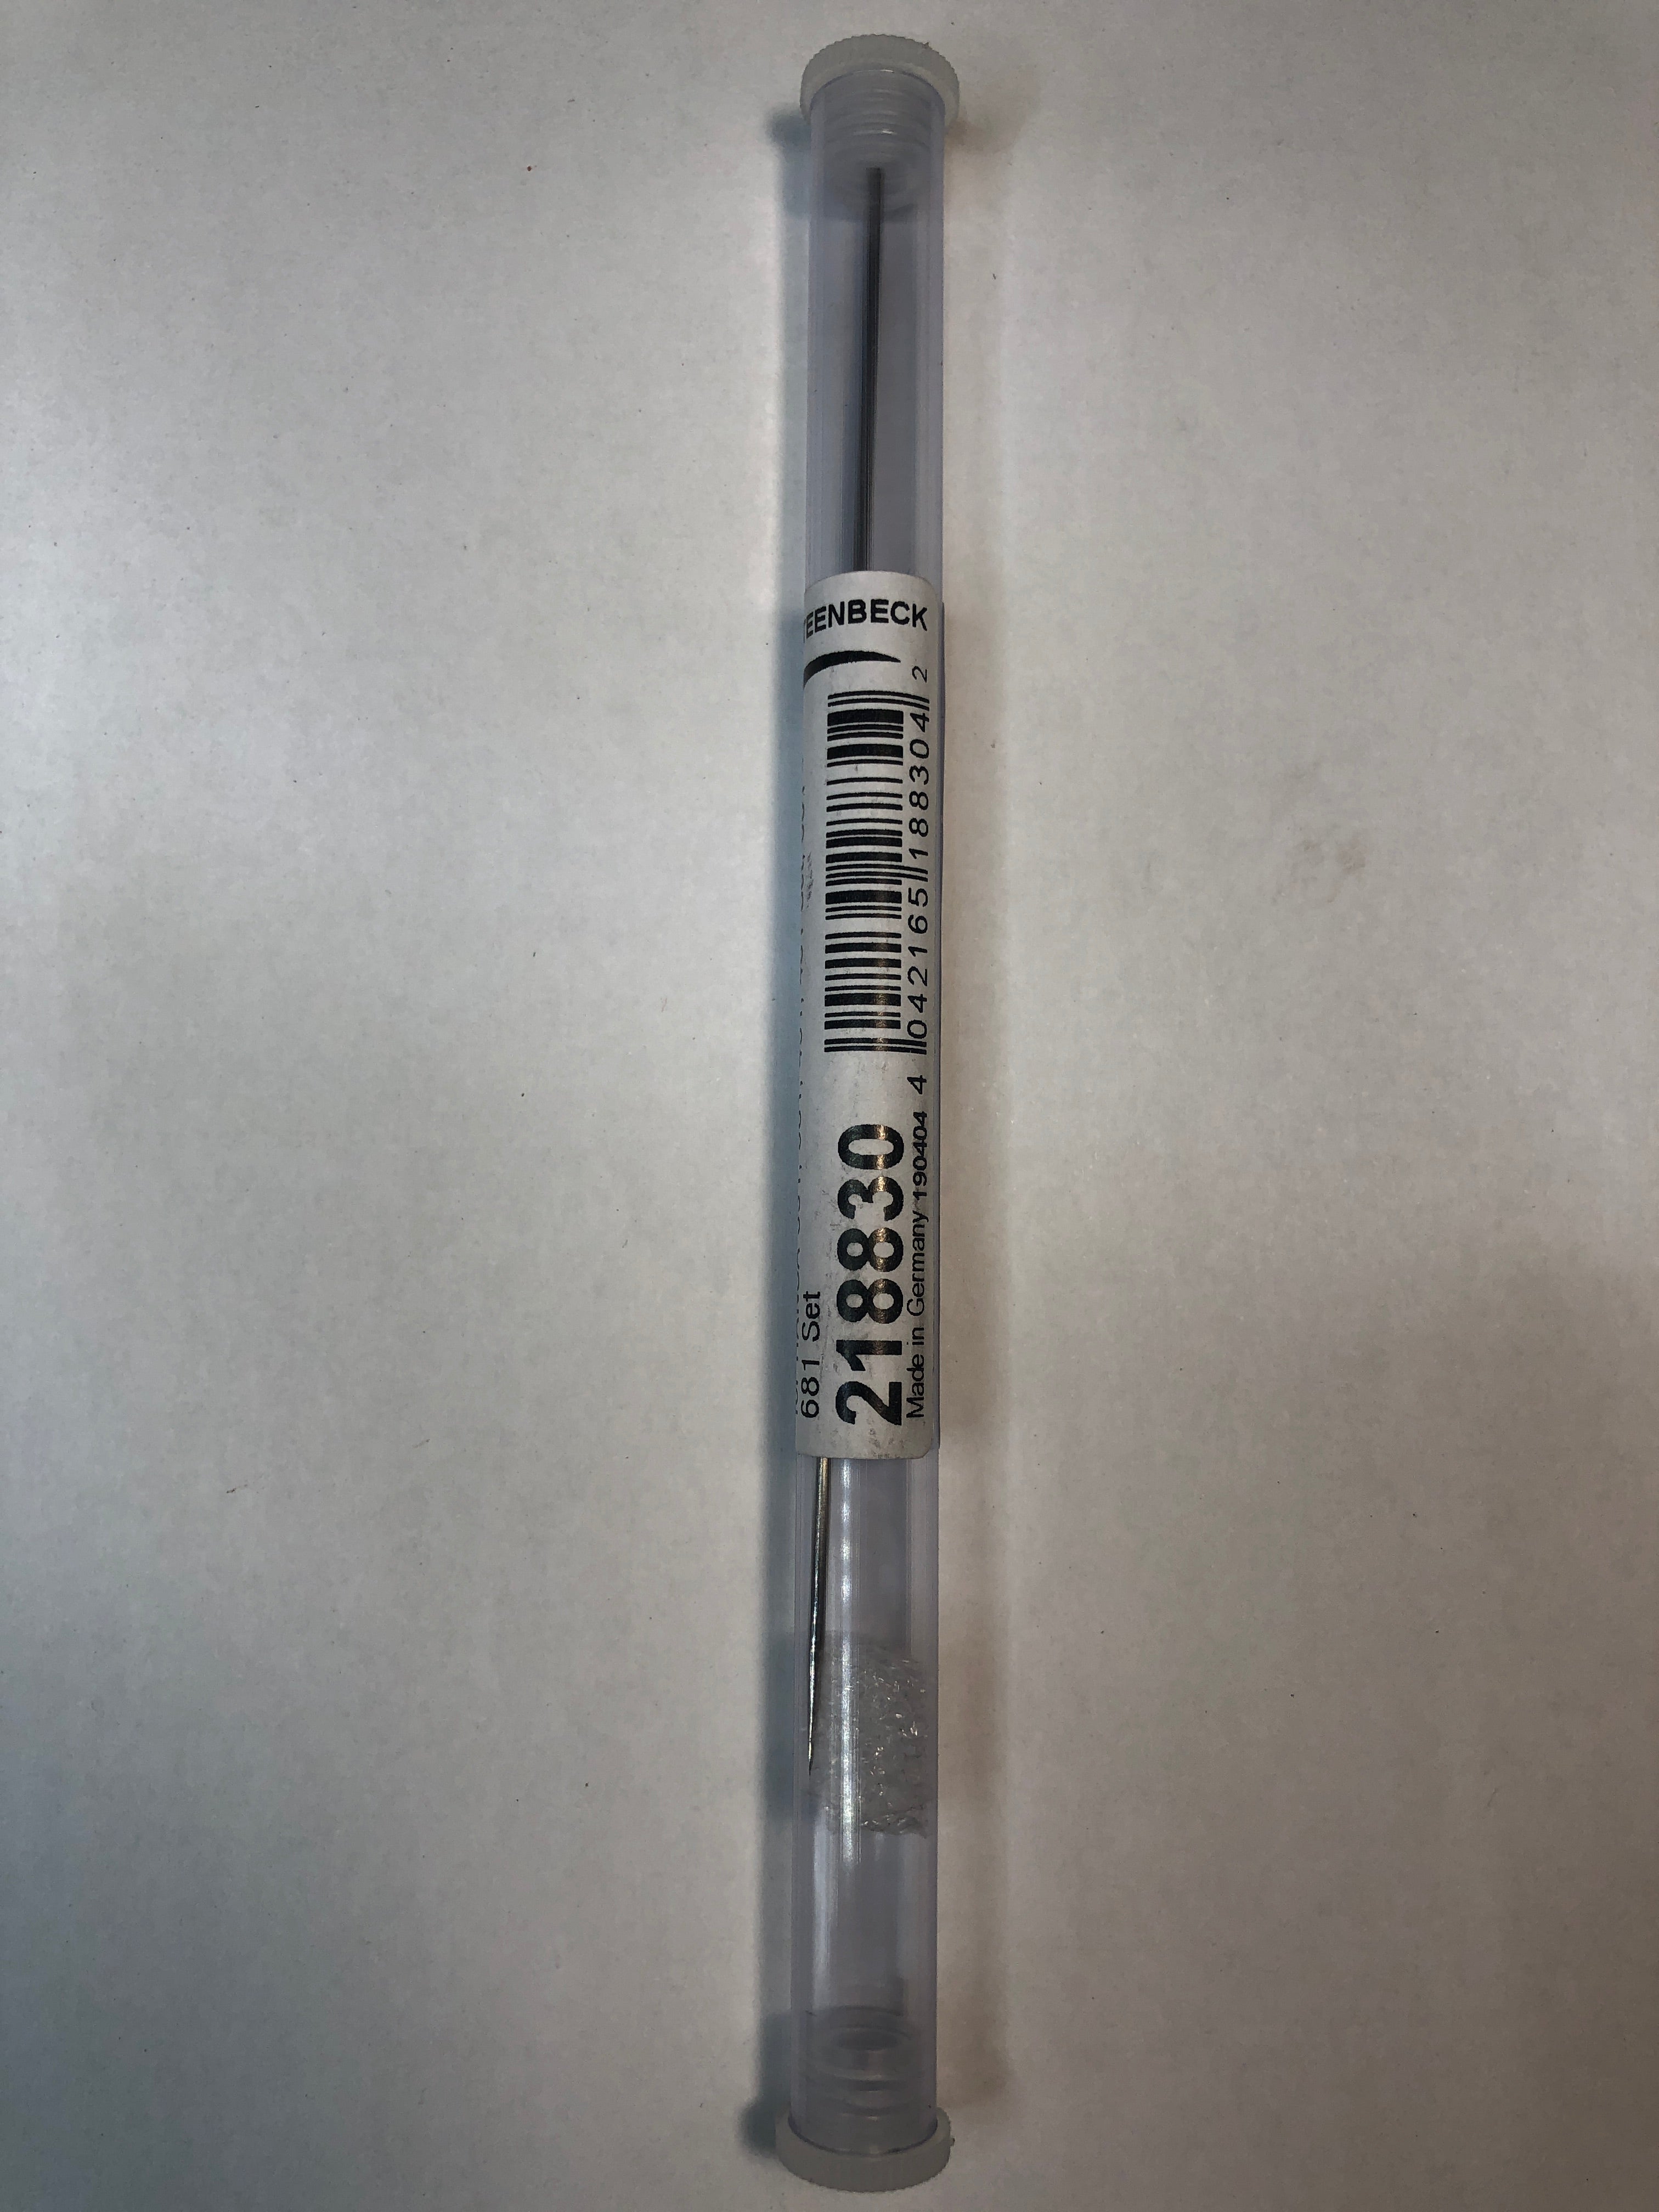 218830 Airbrush Needle 0.3 mm for Hansa - Harder & Steenbeck